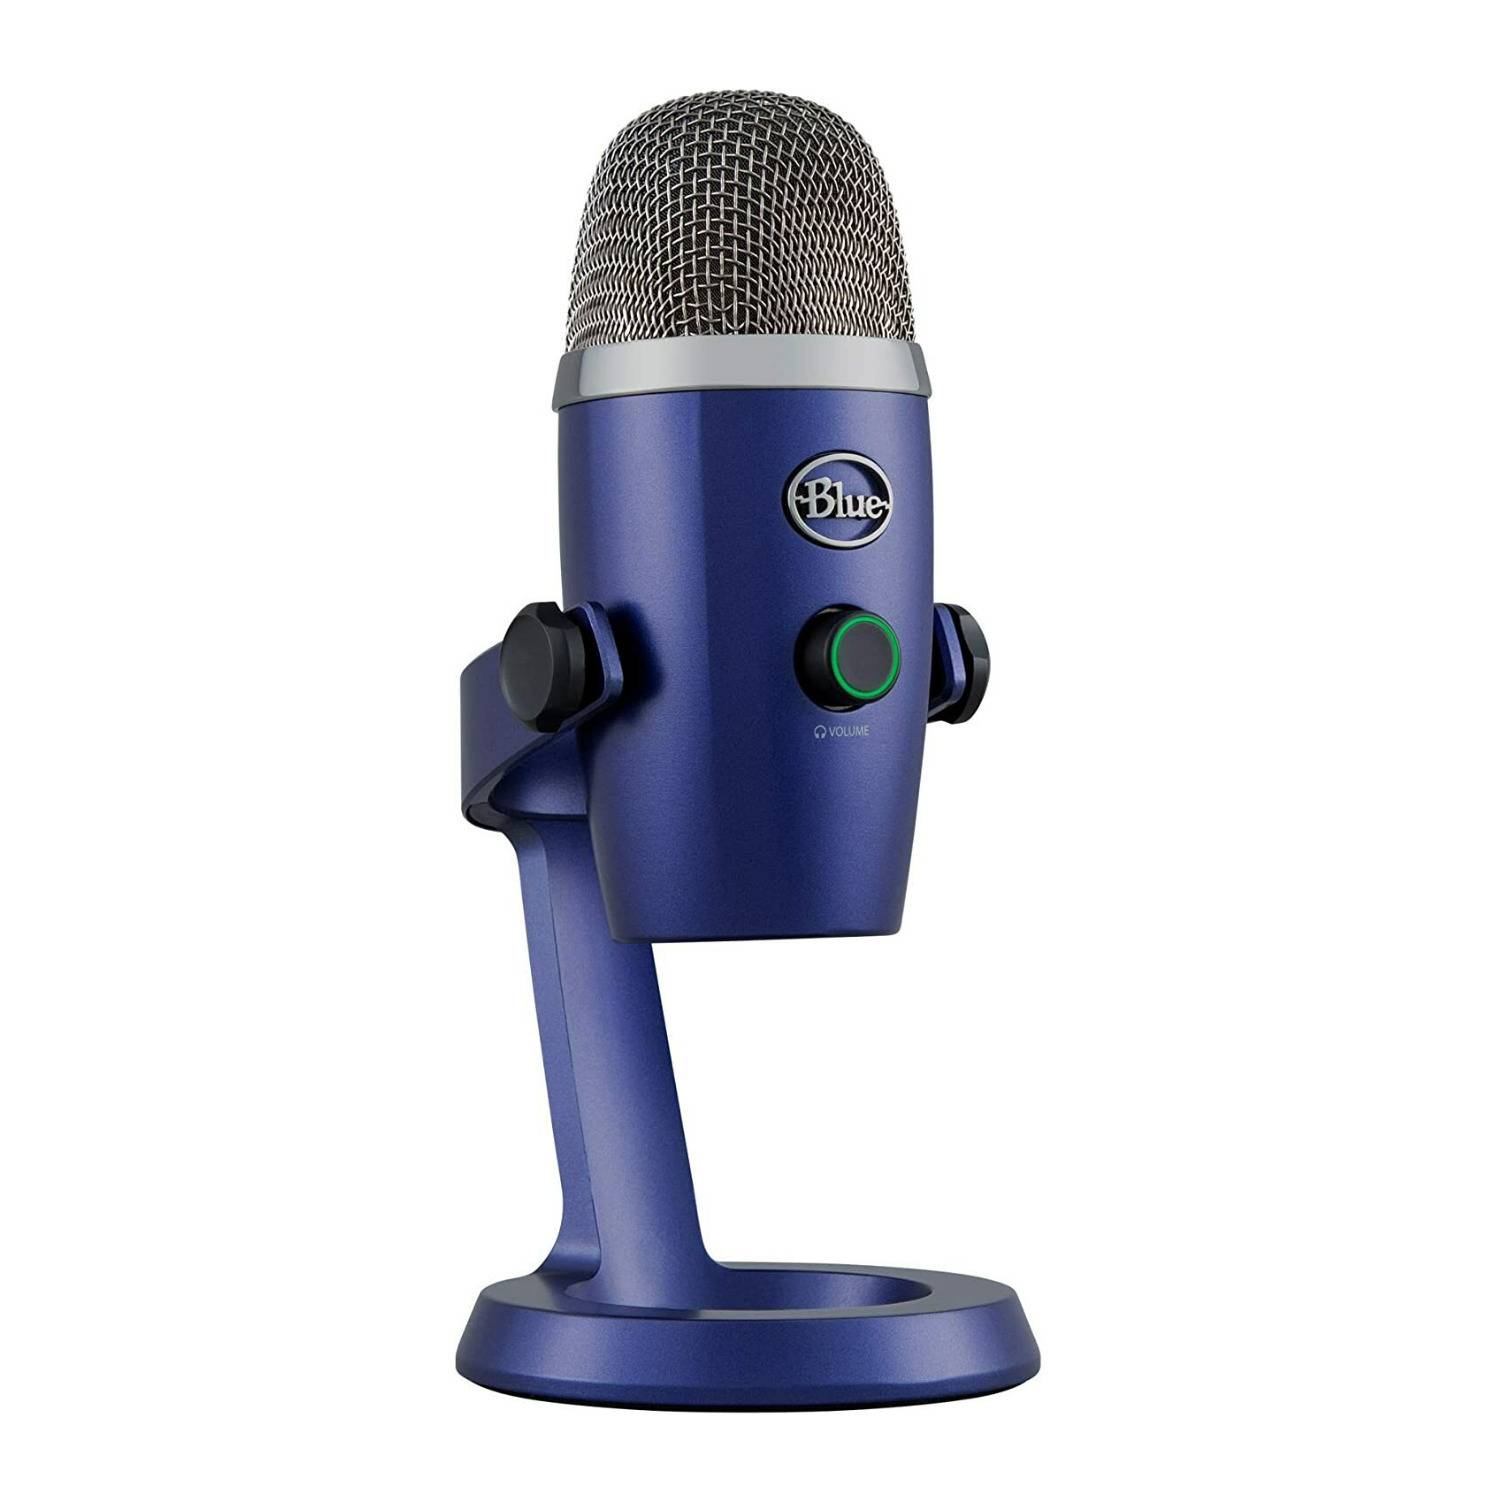 Blue Yeti Nano Premium USB Microphone with Blue Voice Effects (Vivid Blue) Bundle